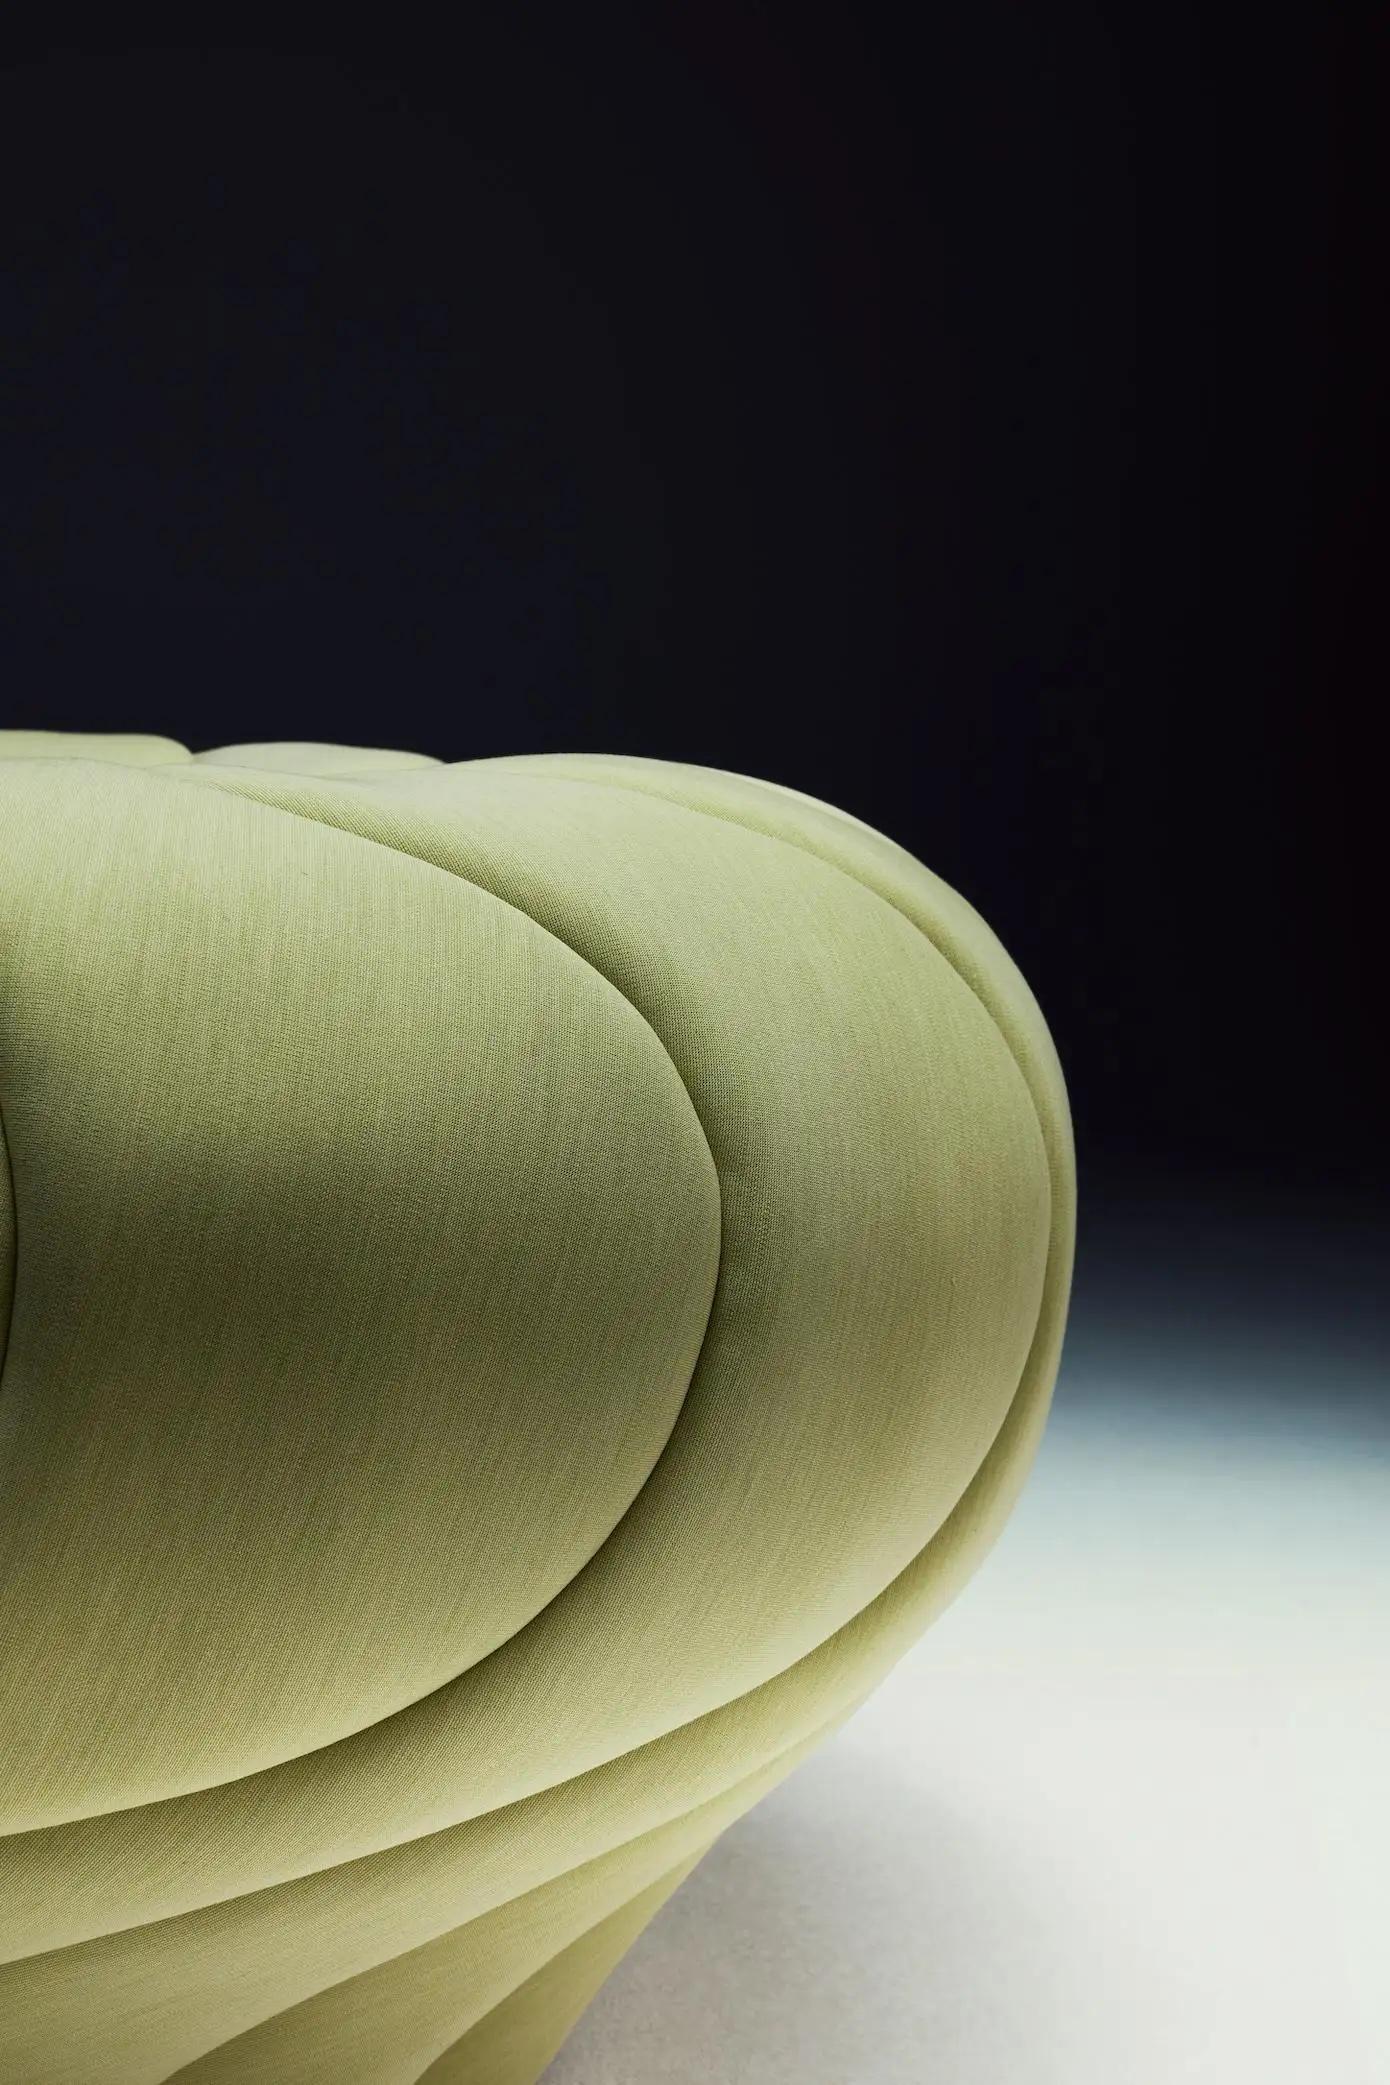 Contemporary La Manufacture-Paris Green Champignon Pouf Designed by Front in STOCK For Sale